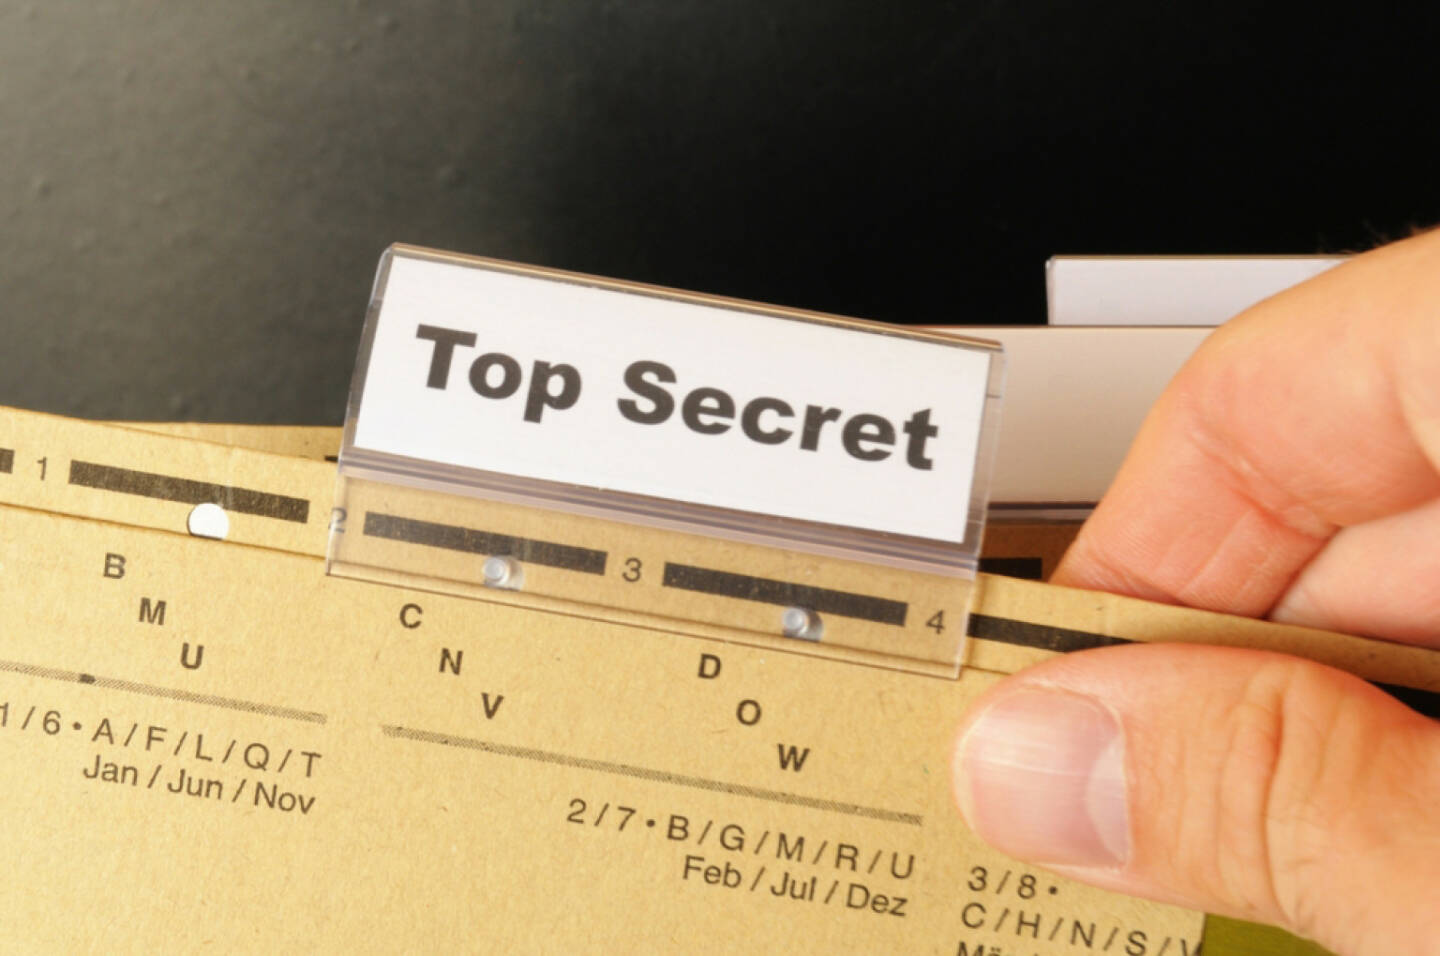 top secret, geheim, Spion, Spionage, erstock.com/de/pic-66675274/stock-photo-top-secret-folder-or-file-in-a-business-office.html? 